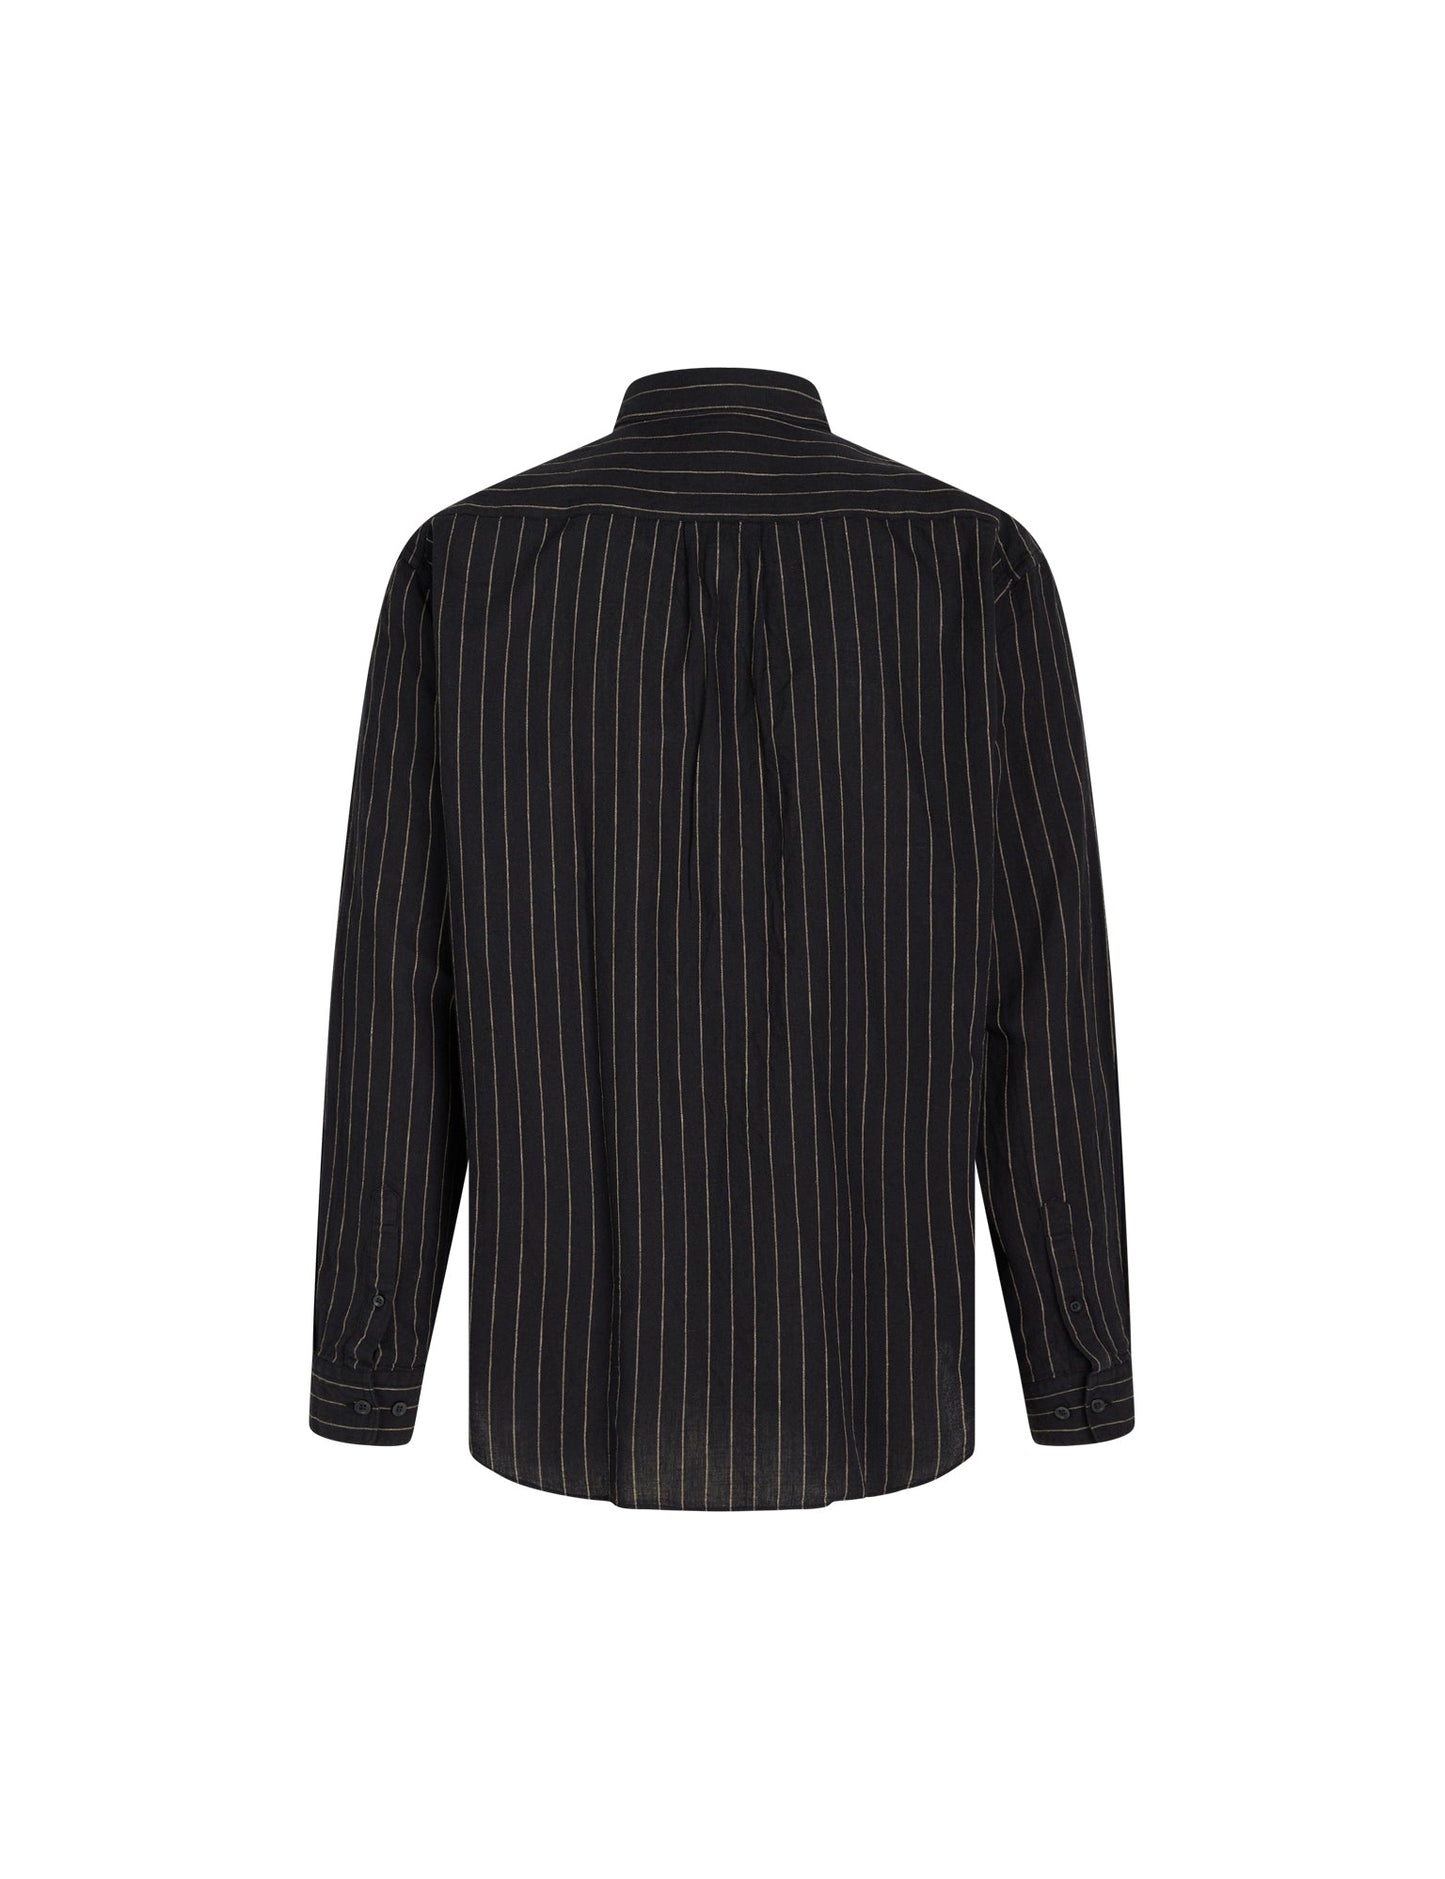 Cotton Linen Malte Shirt, Black/Vintage Khaki